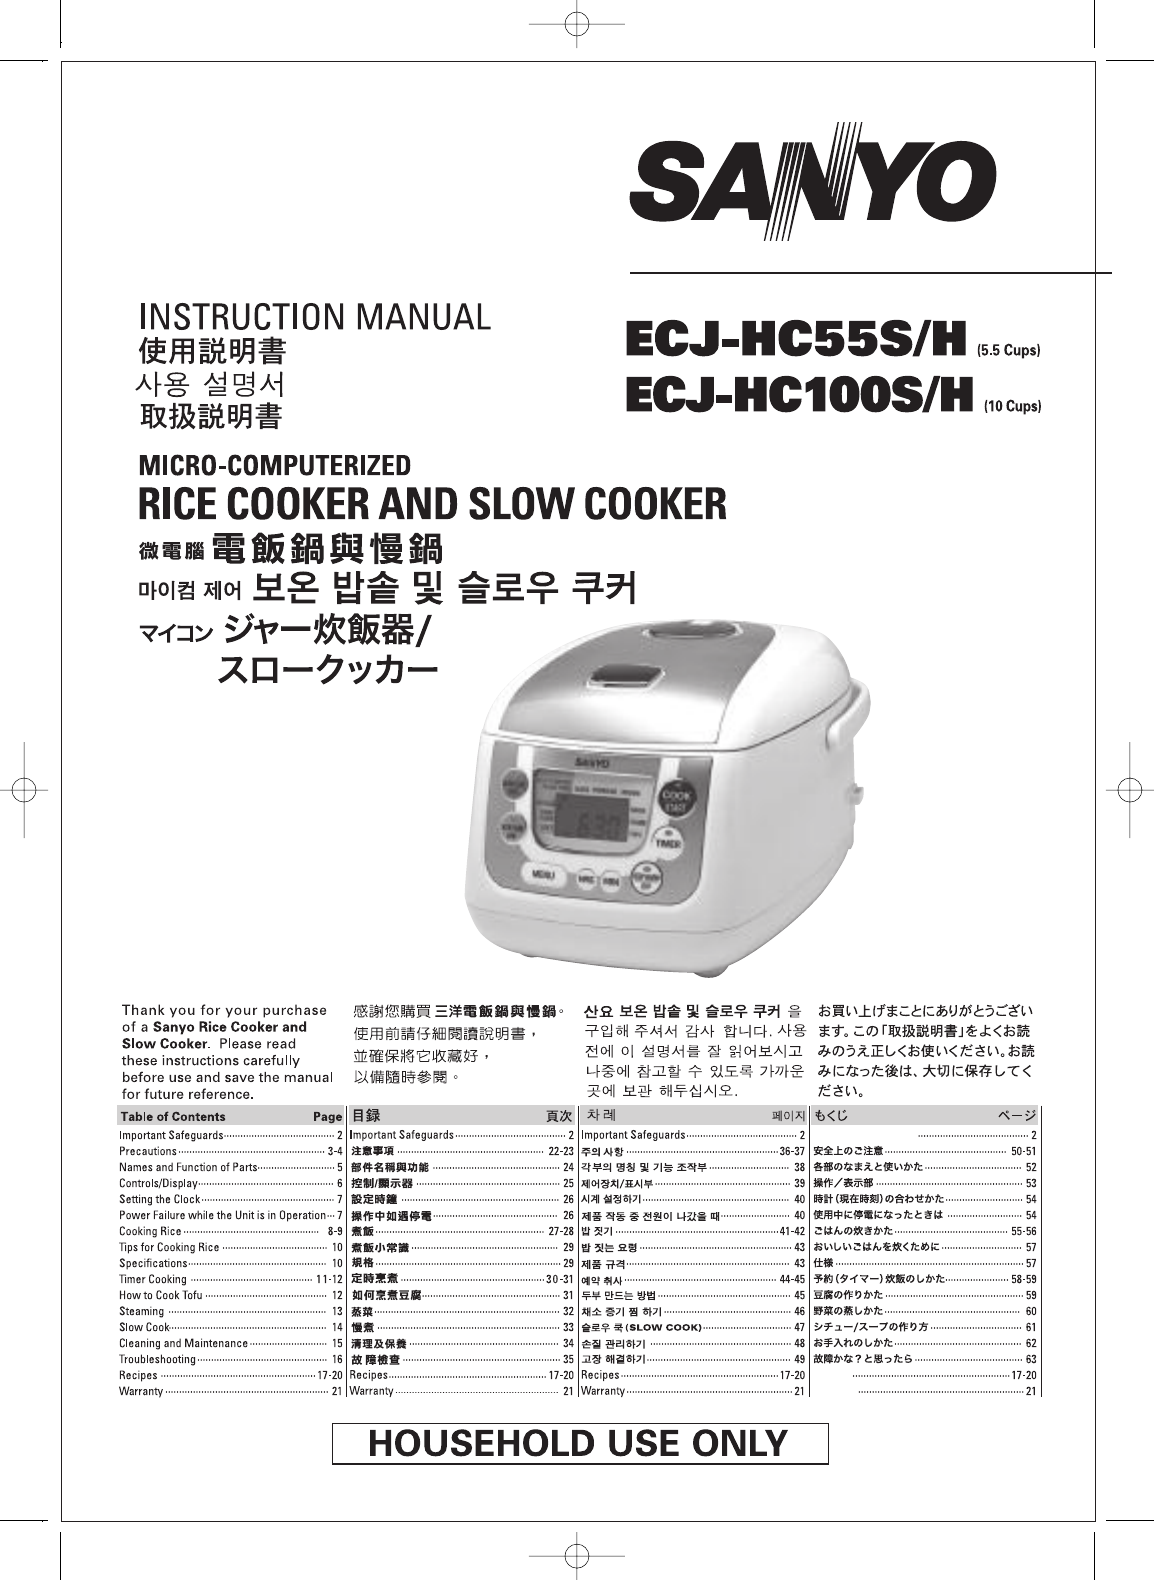 Sanyo Rice Cooker ECJ-E35S User Guide : Free Download, Borrow, and